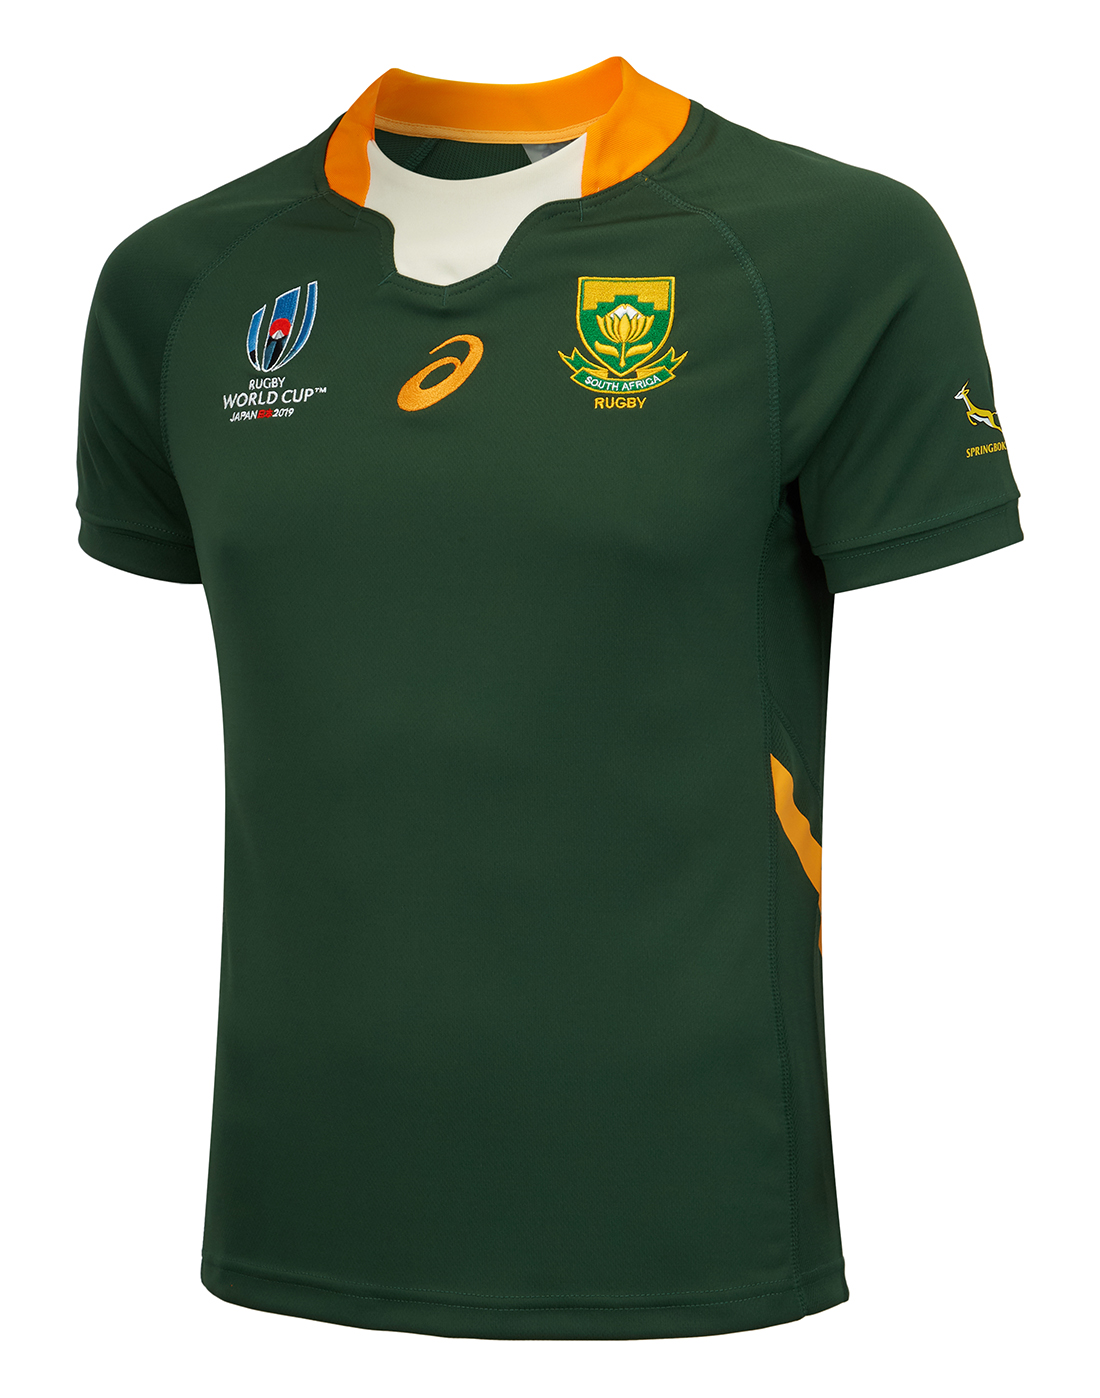 springbok rugby shirts 2019